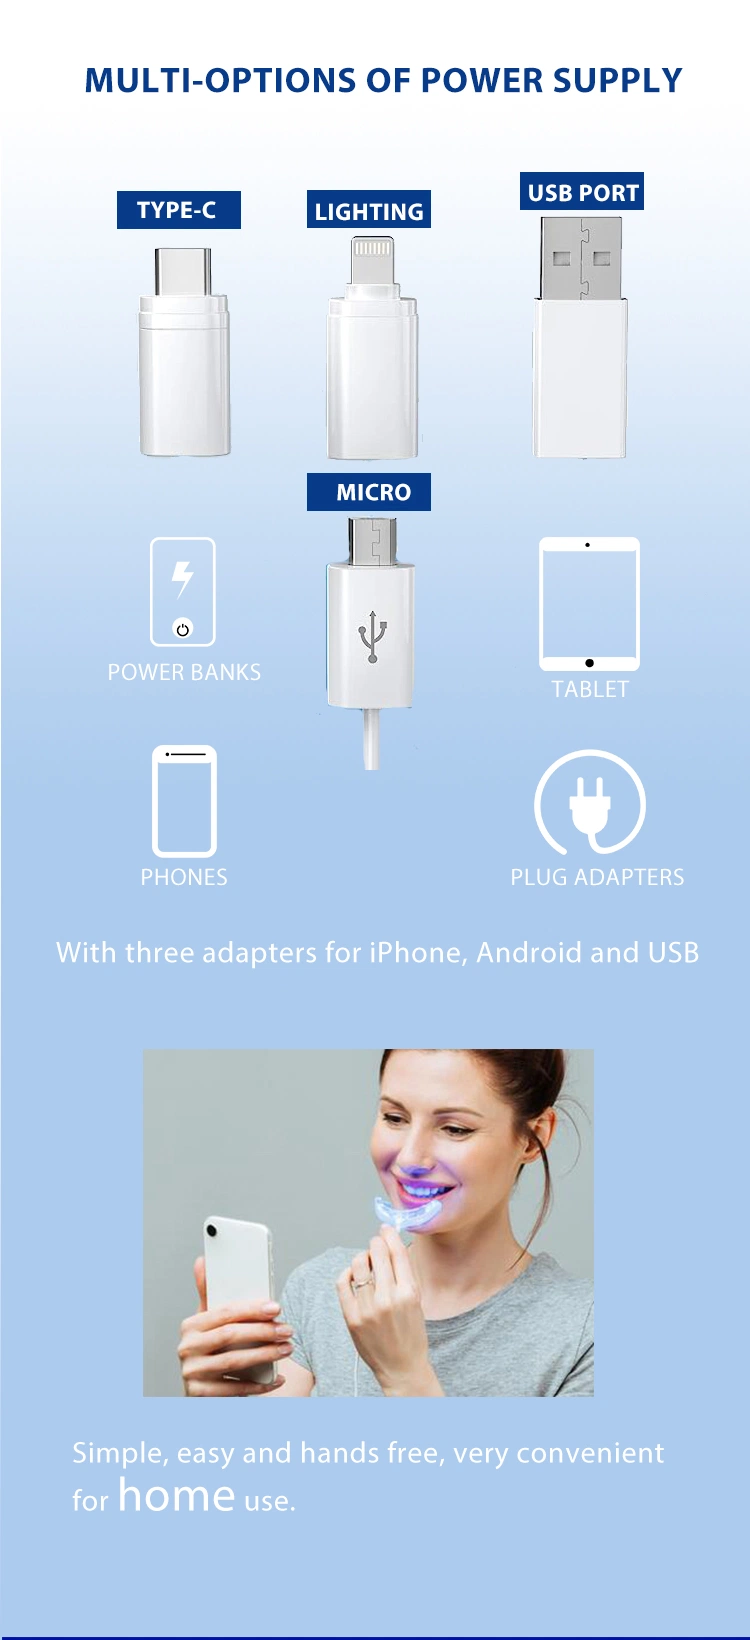 Cold Light Laser Portable Smart Phone USB Support Zoom Bleach LED Light Device 16LED Teeth Whitening Mini Light